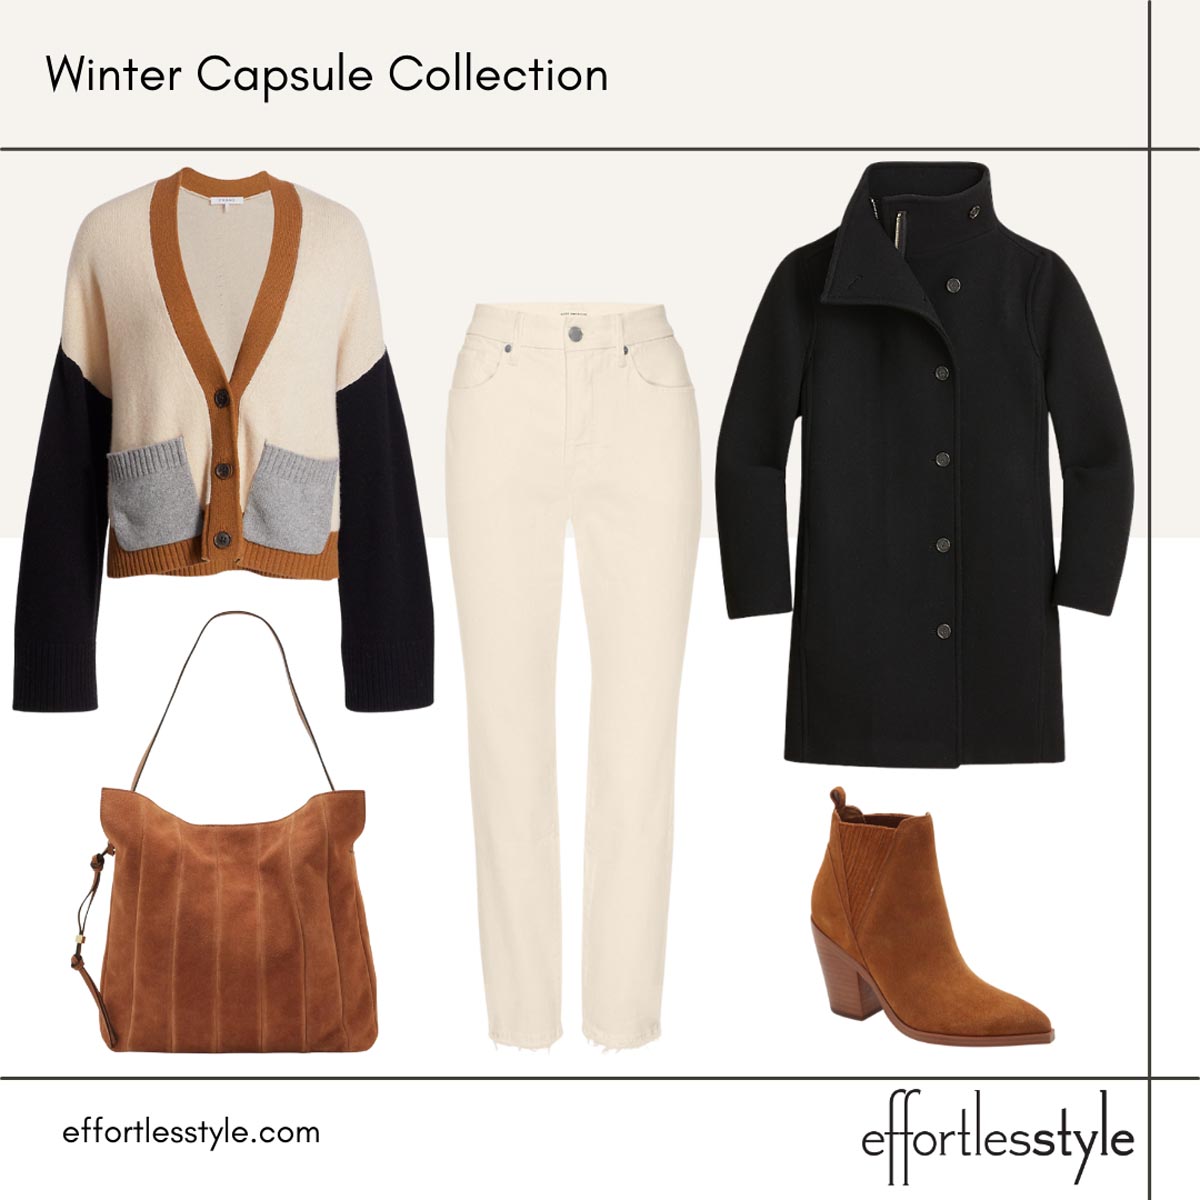 Colorblock Cashmere Cardigan Outfit Women's Winter Capsule Wardrobe